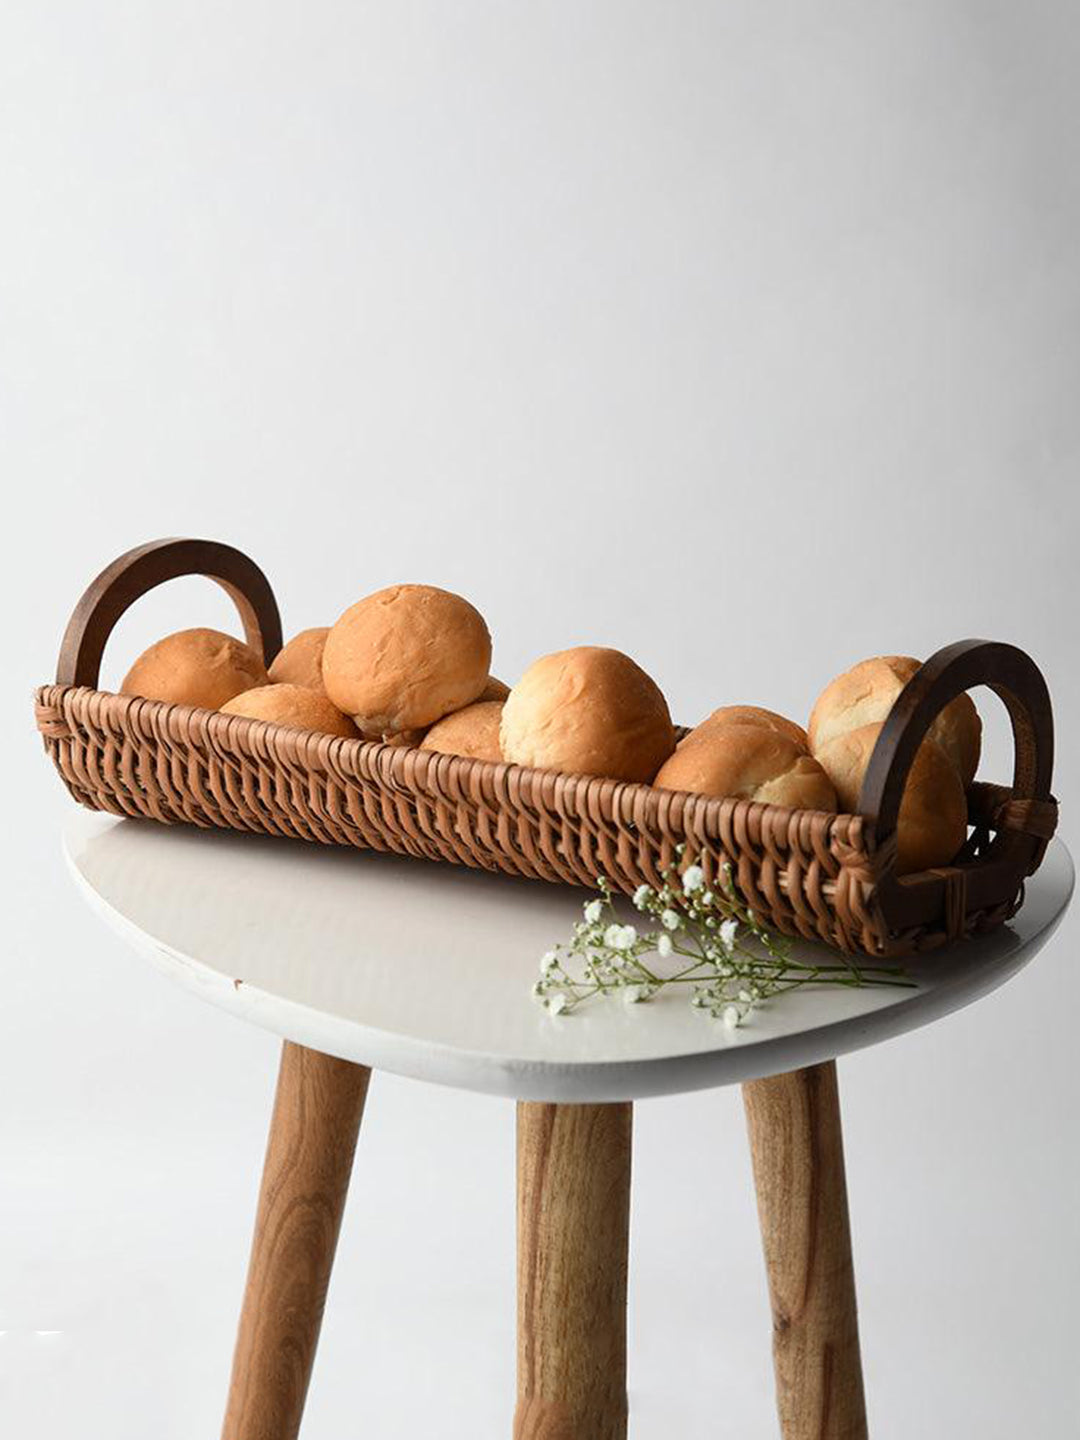 Handmade Wicker Bread Tray